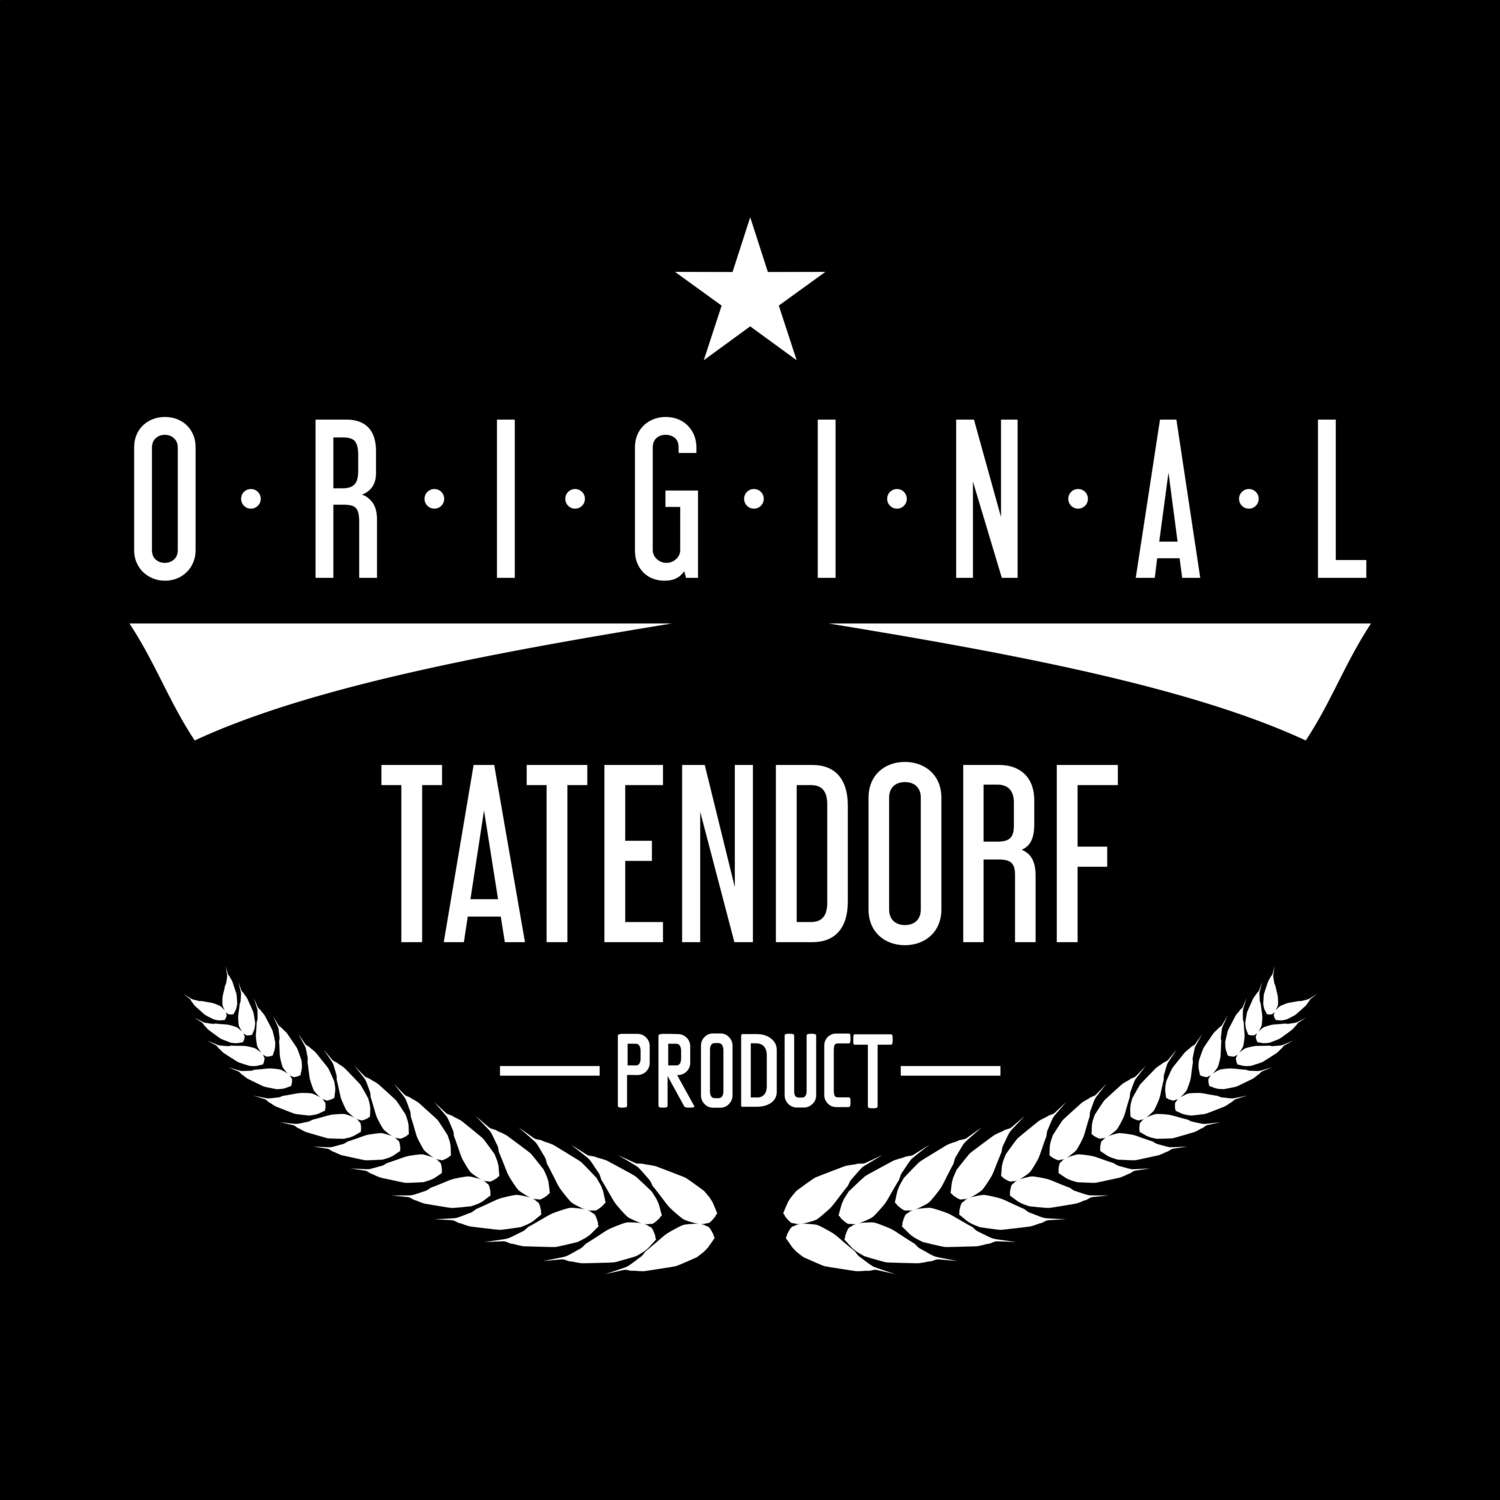 Tatendorf T-Shirt »Original Product«